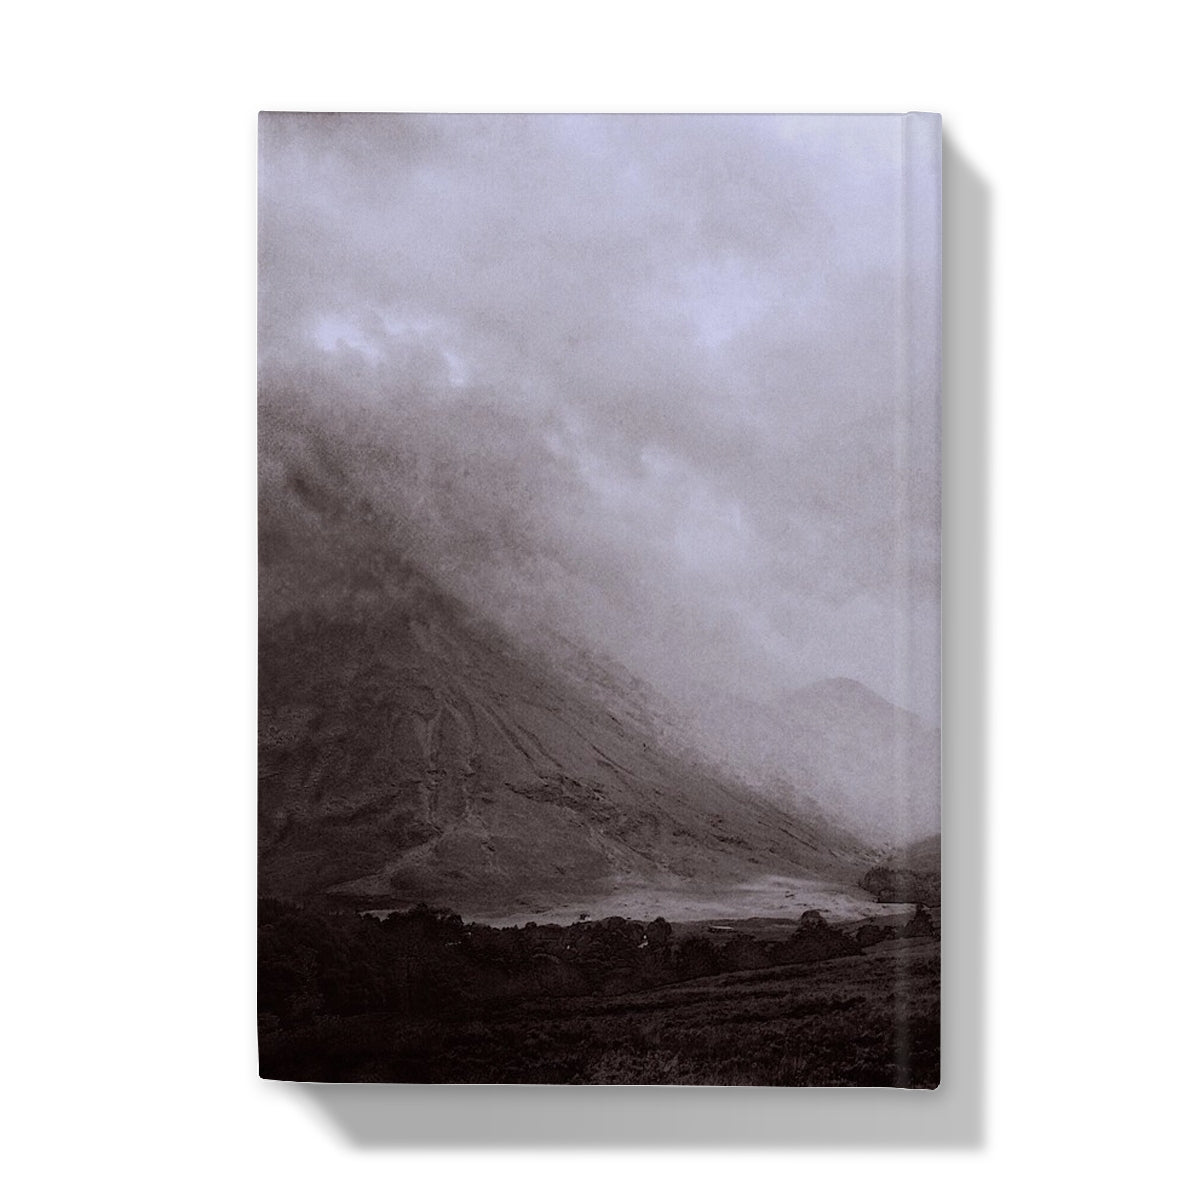 Glencoe Mist Art Gifts Hardback Journal-Journals & Notebooks-Glencoe Art Gallery-Paintings, Prints, Homeware, Art Gifts From Scotland By Scottish Artist Kevin Hunter